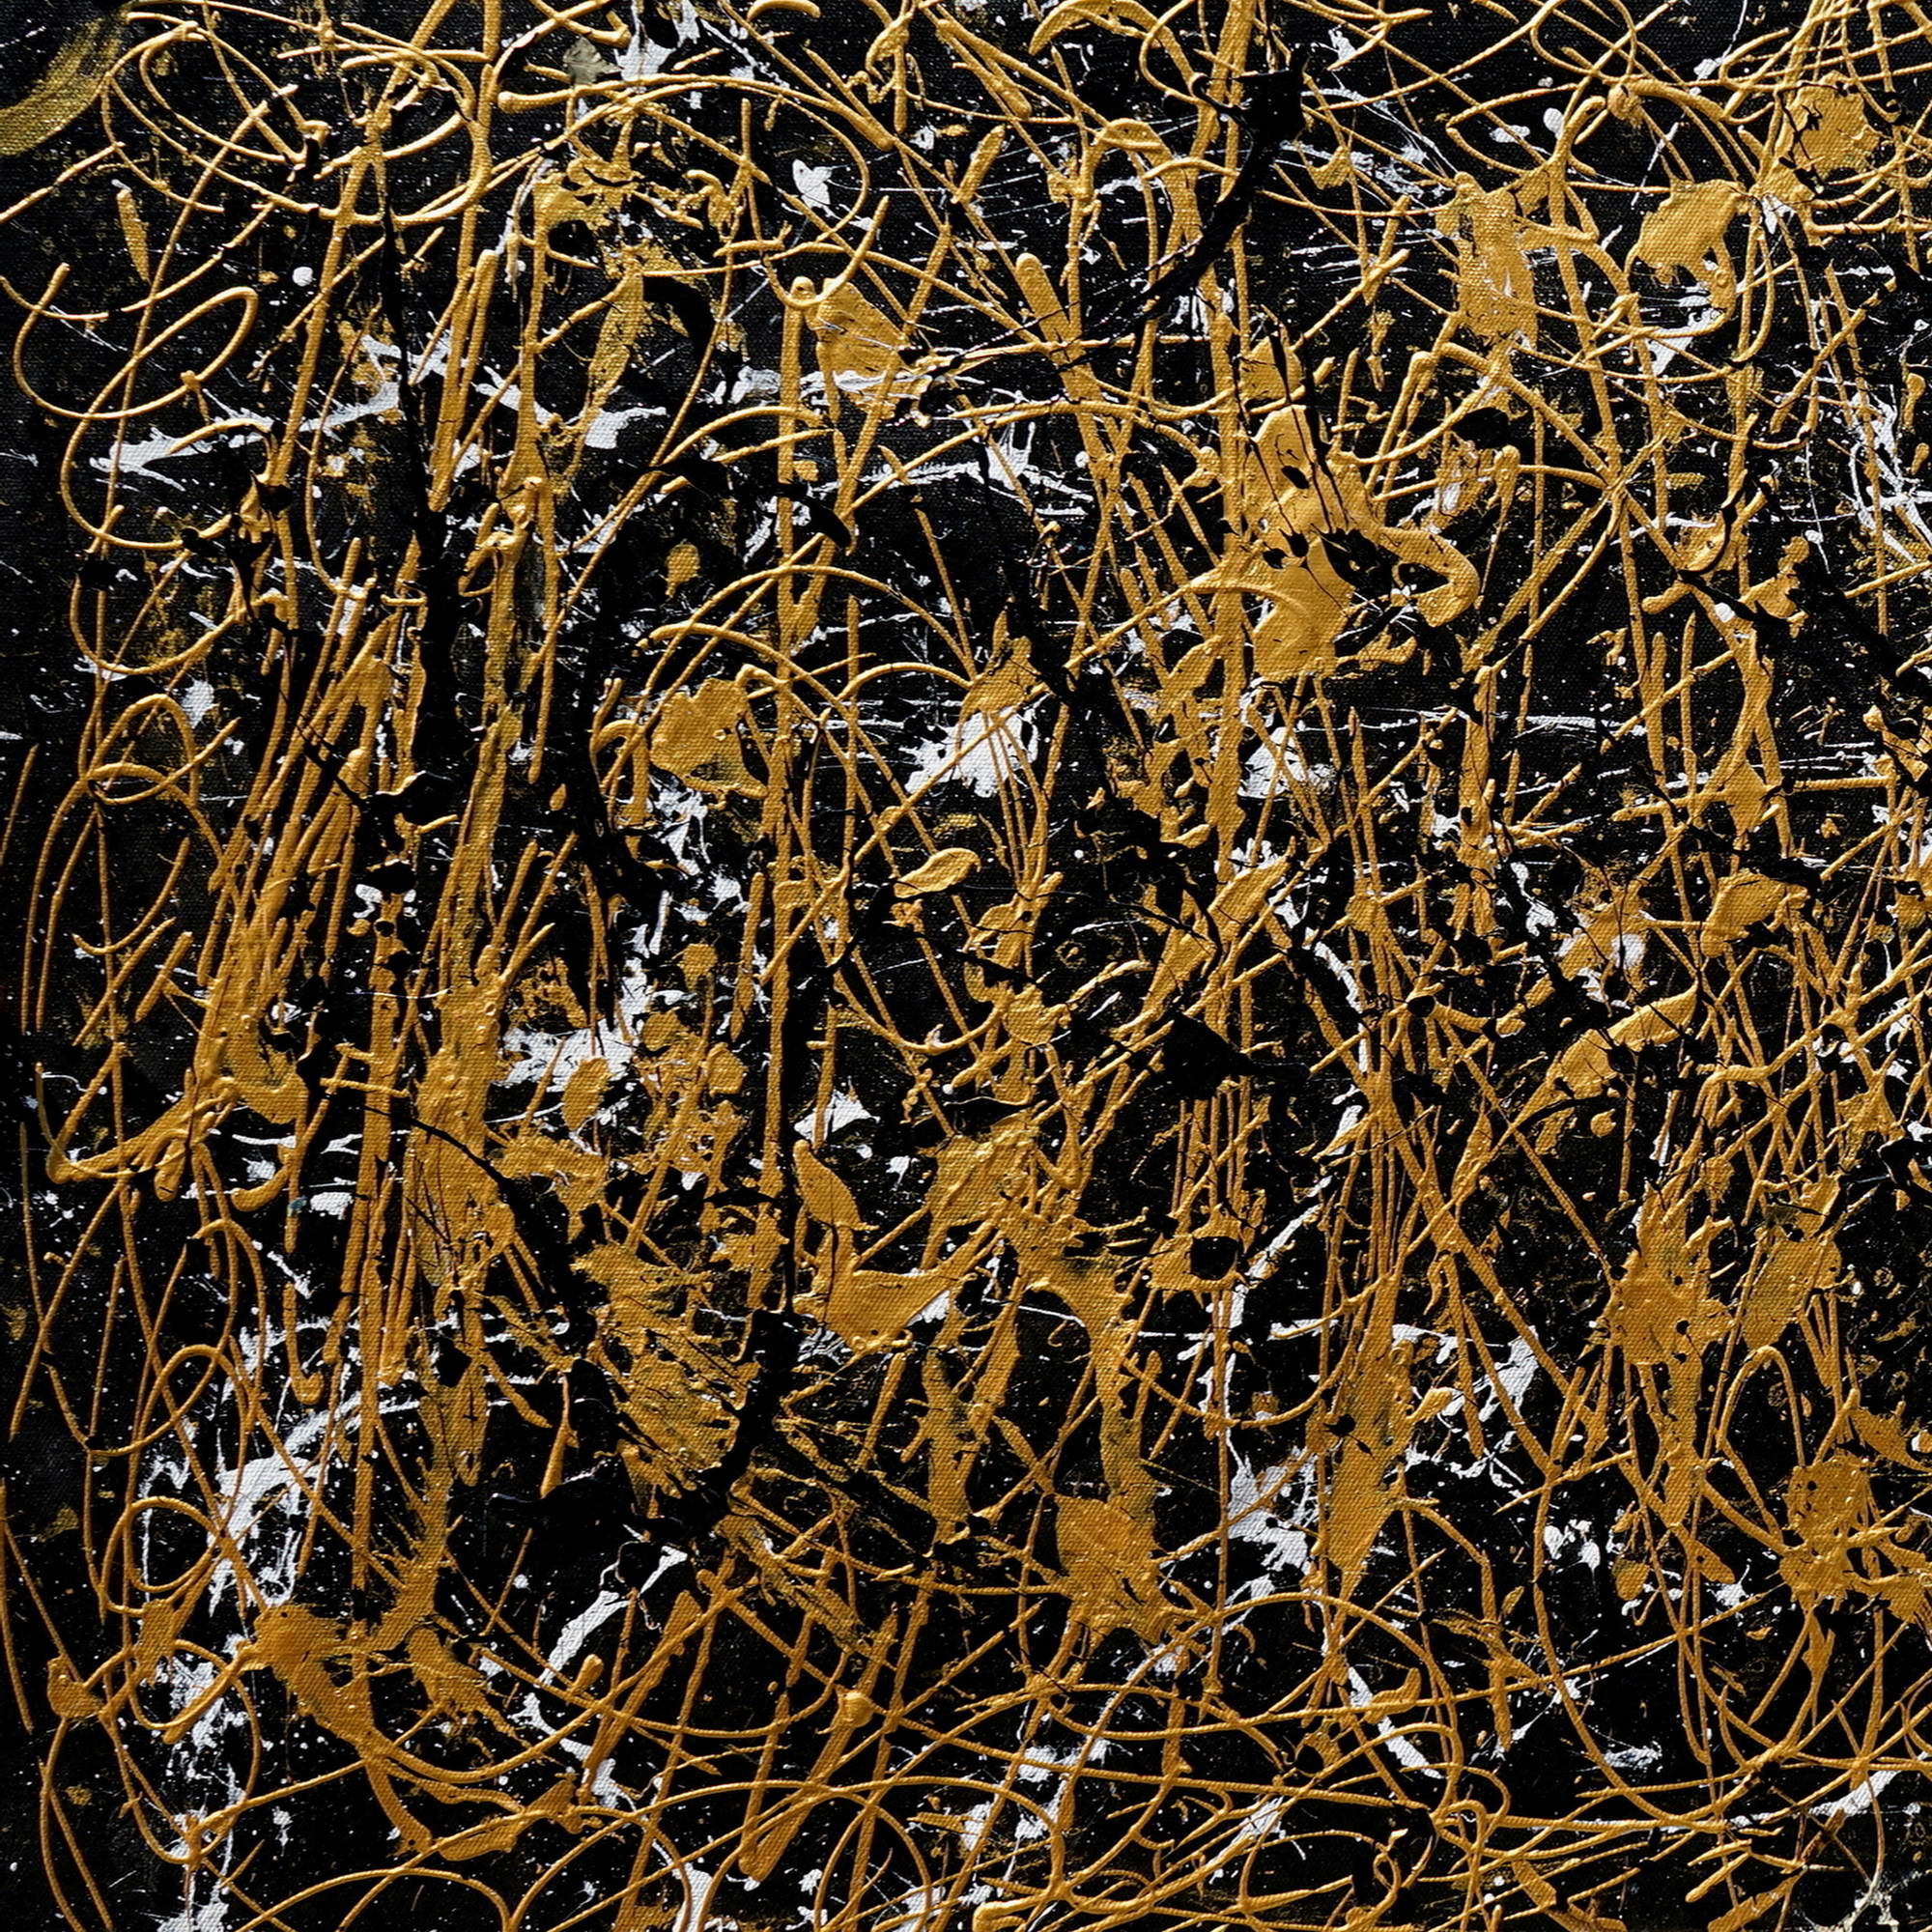 Dipinto a mano Astratto stile Pollock 75x150cm